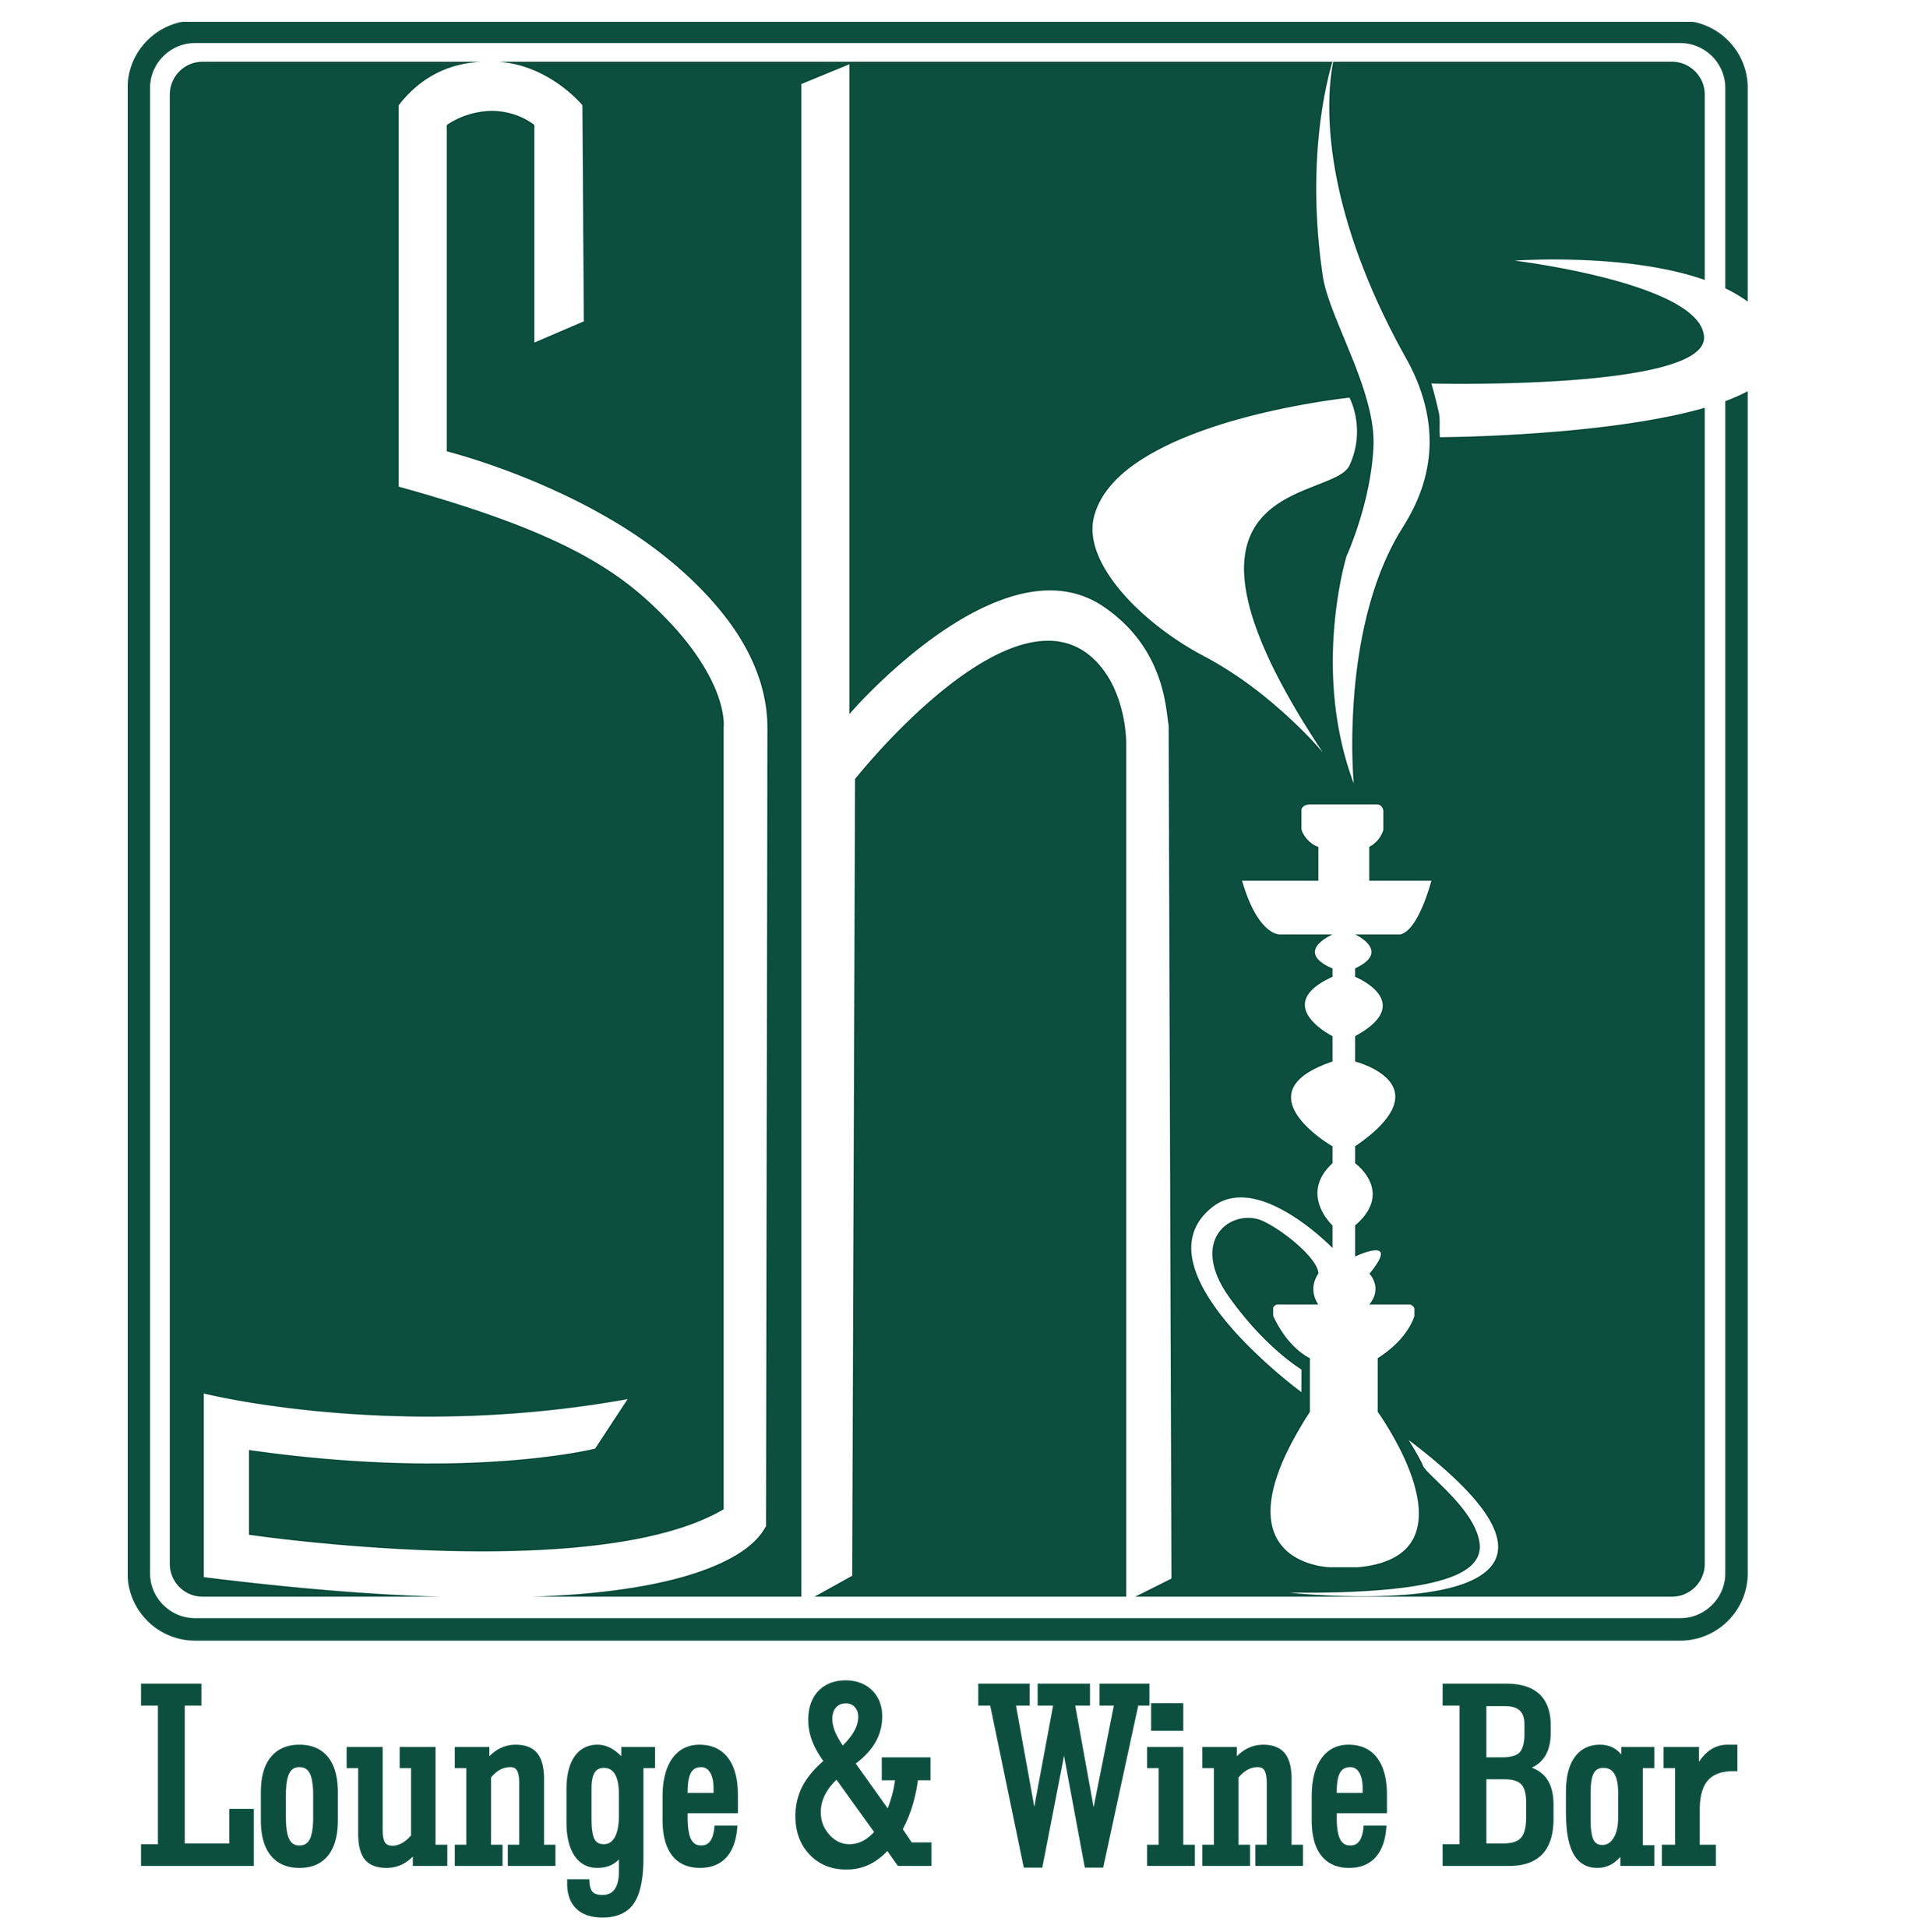 SHI LOUNGE AND WINE BAR